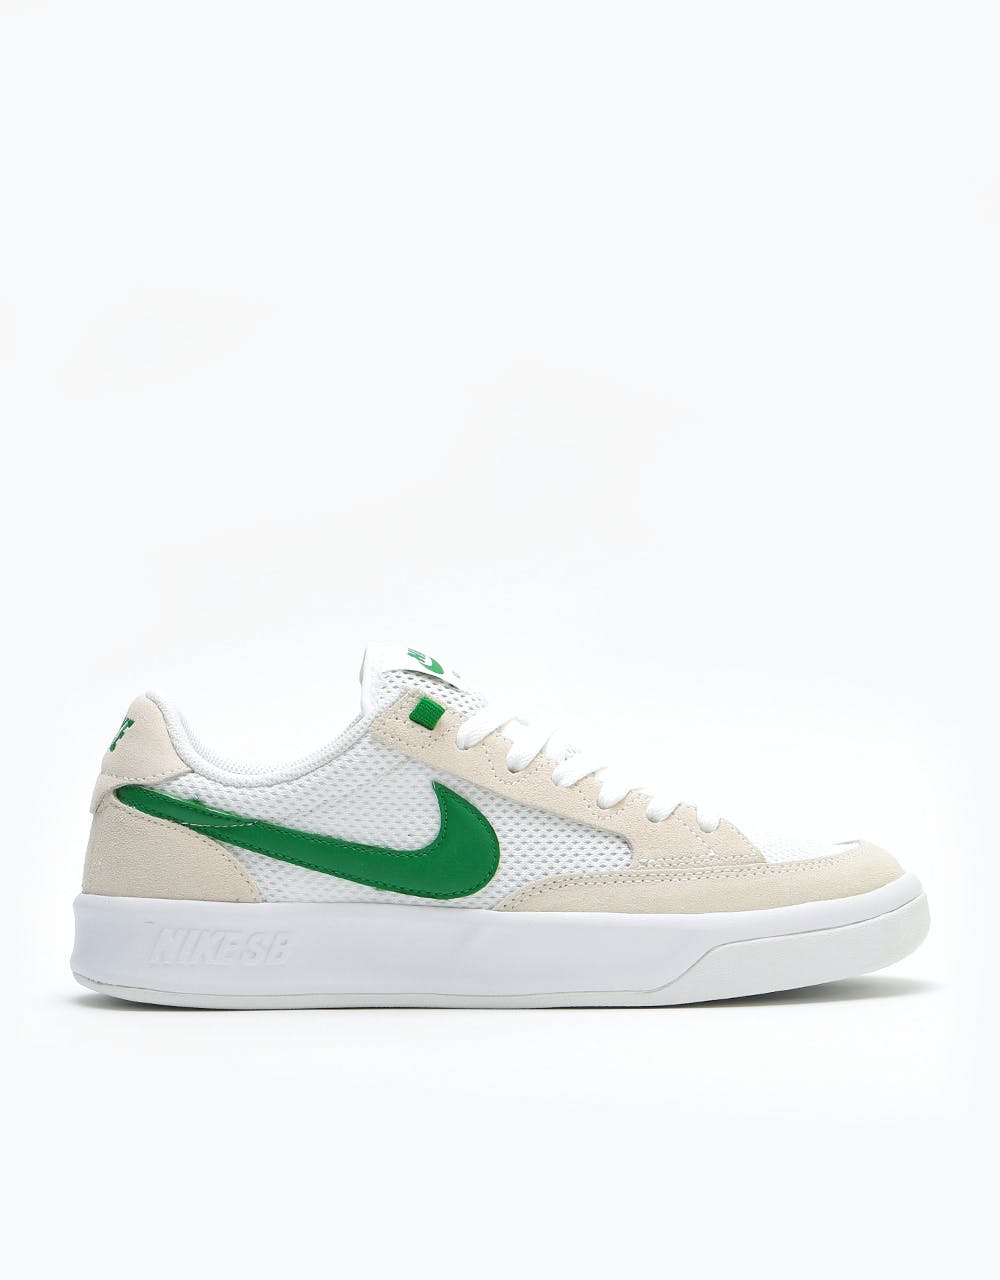 nike green white shoes